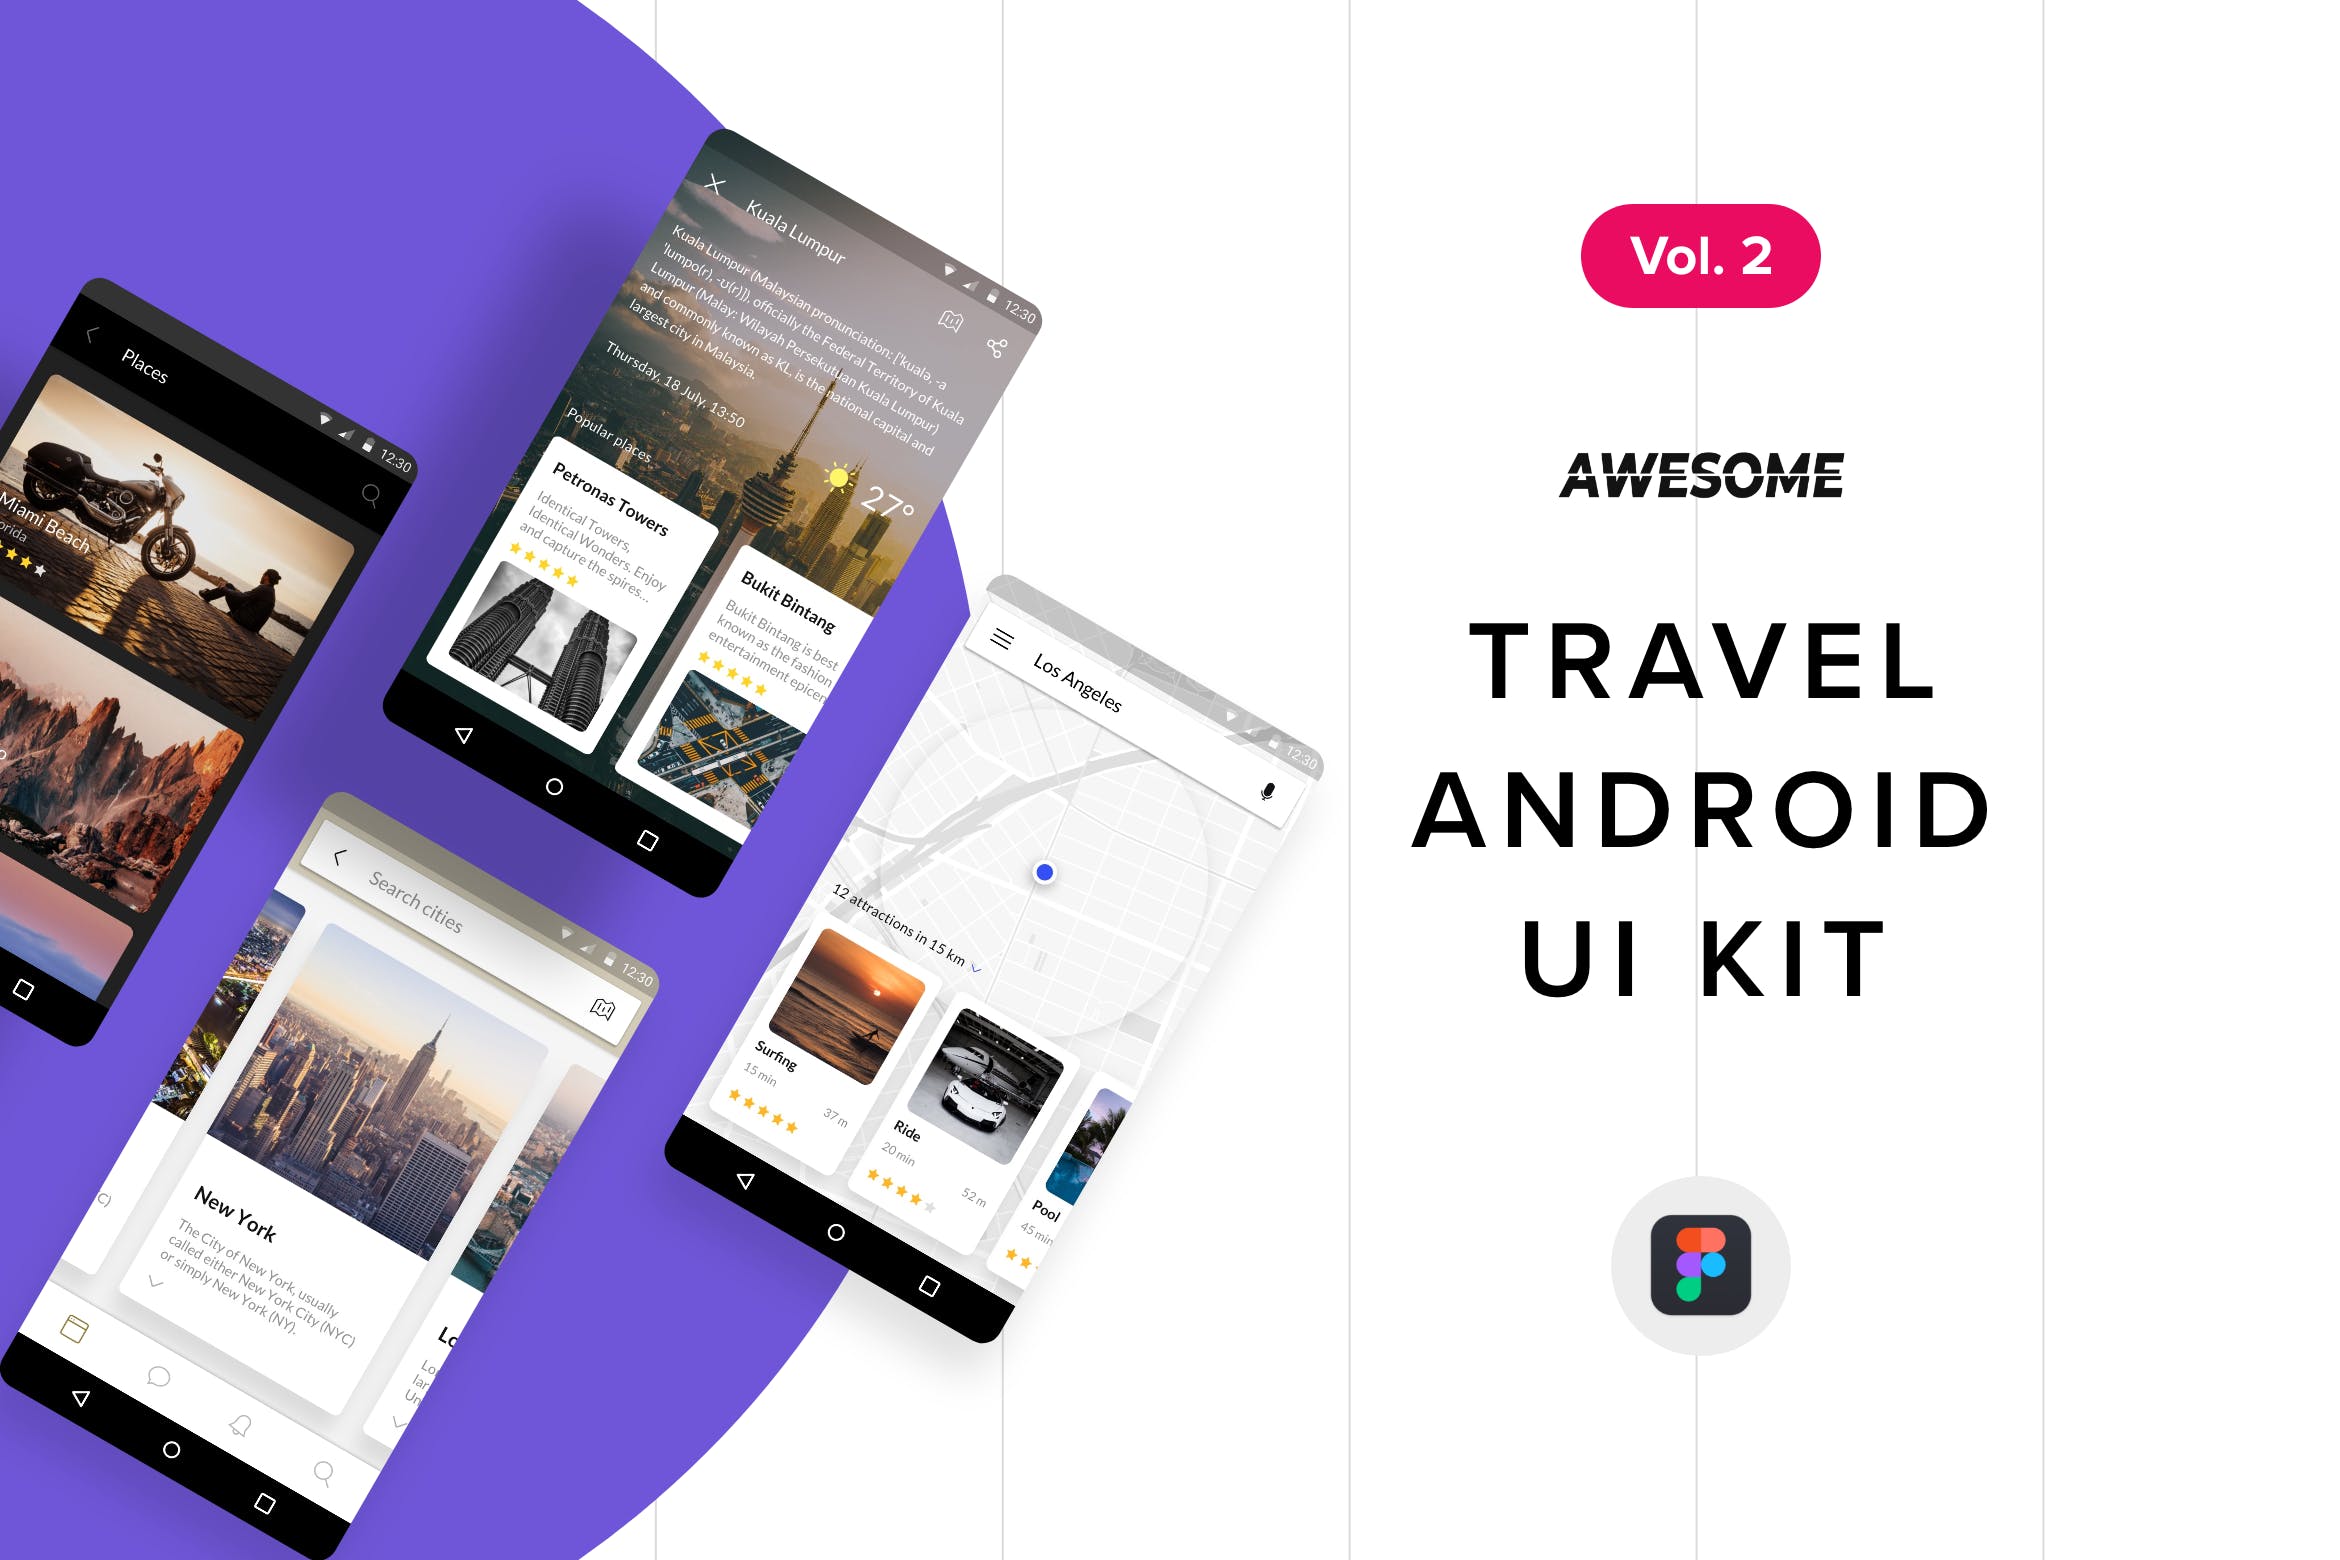 安卓手机平台旅游APP应用UI设计套件v2[Figma] Android UI Kit – Travel Vol. 2 (Figma)插图